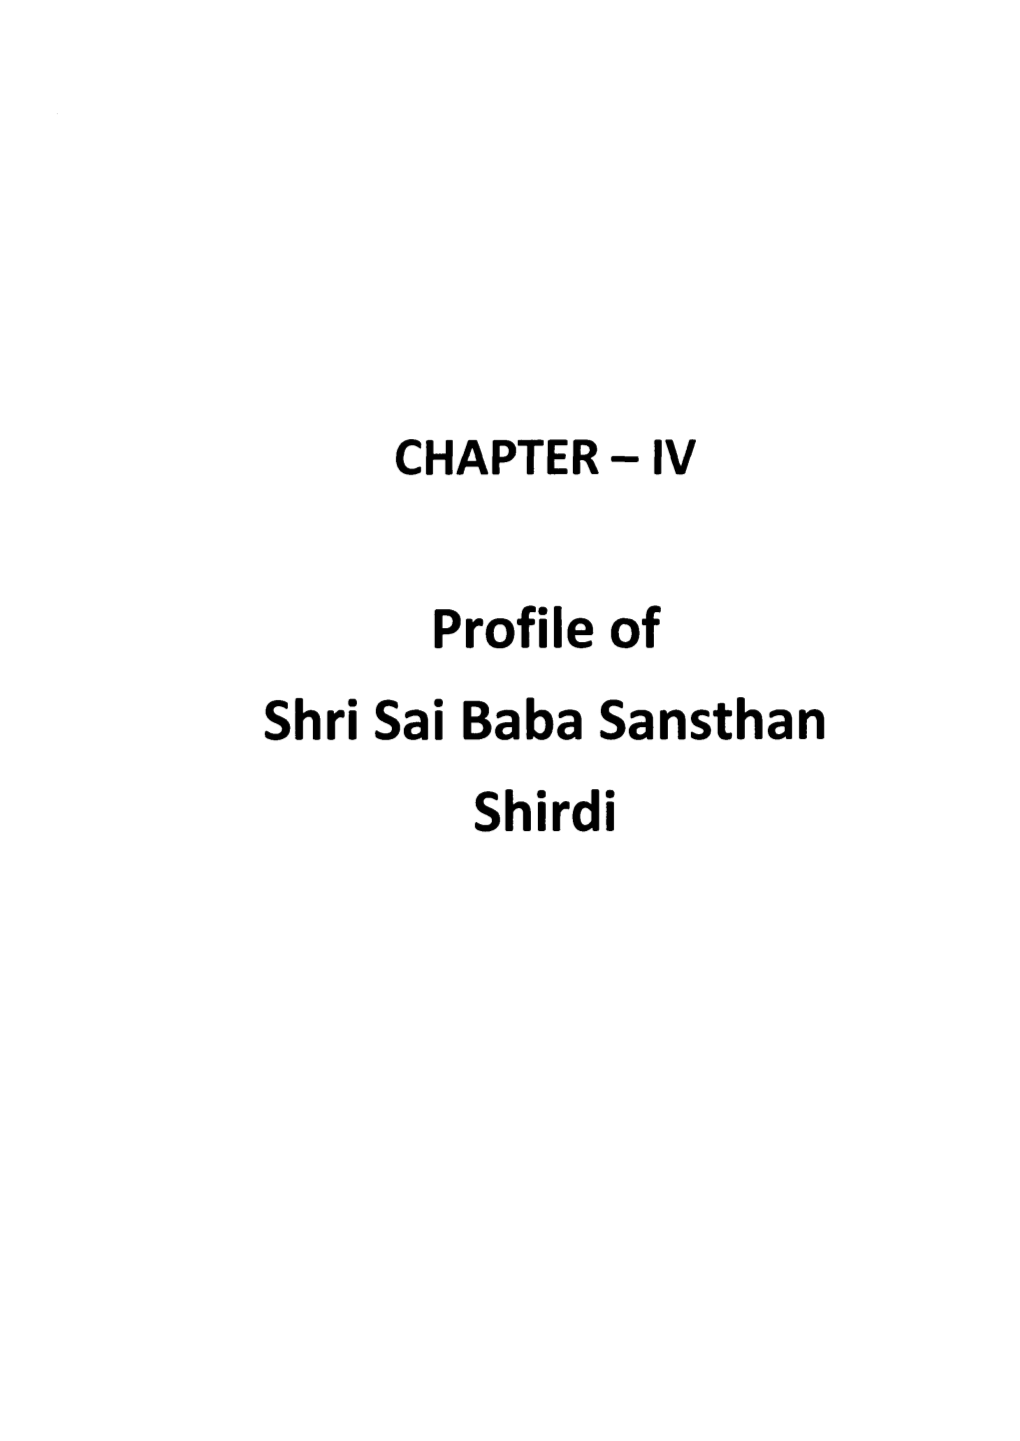 Profile of Shri Sai Baba Sansthan Shirdi Chapter IV Profile of Shri Sai Baba Sansthan Shirdi